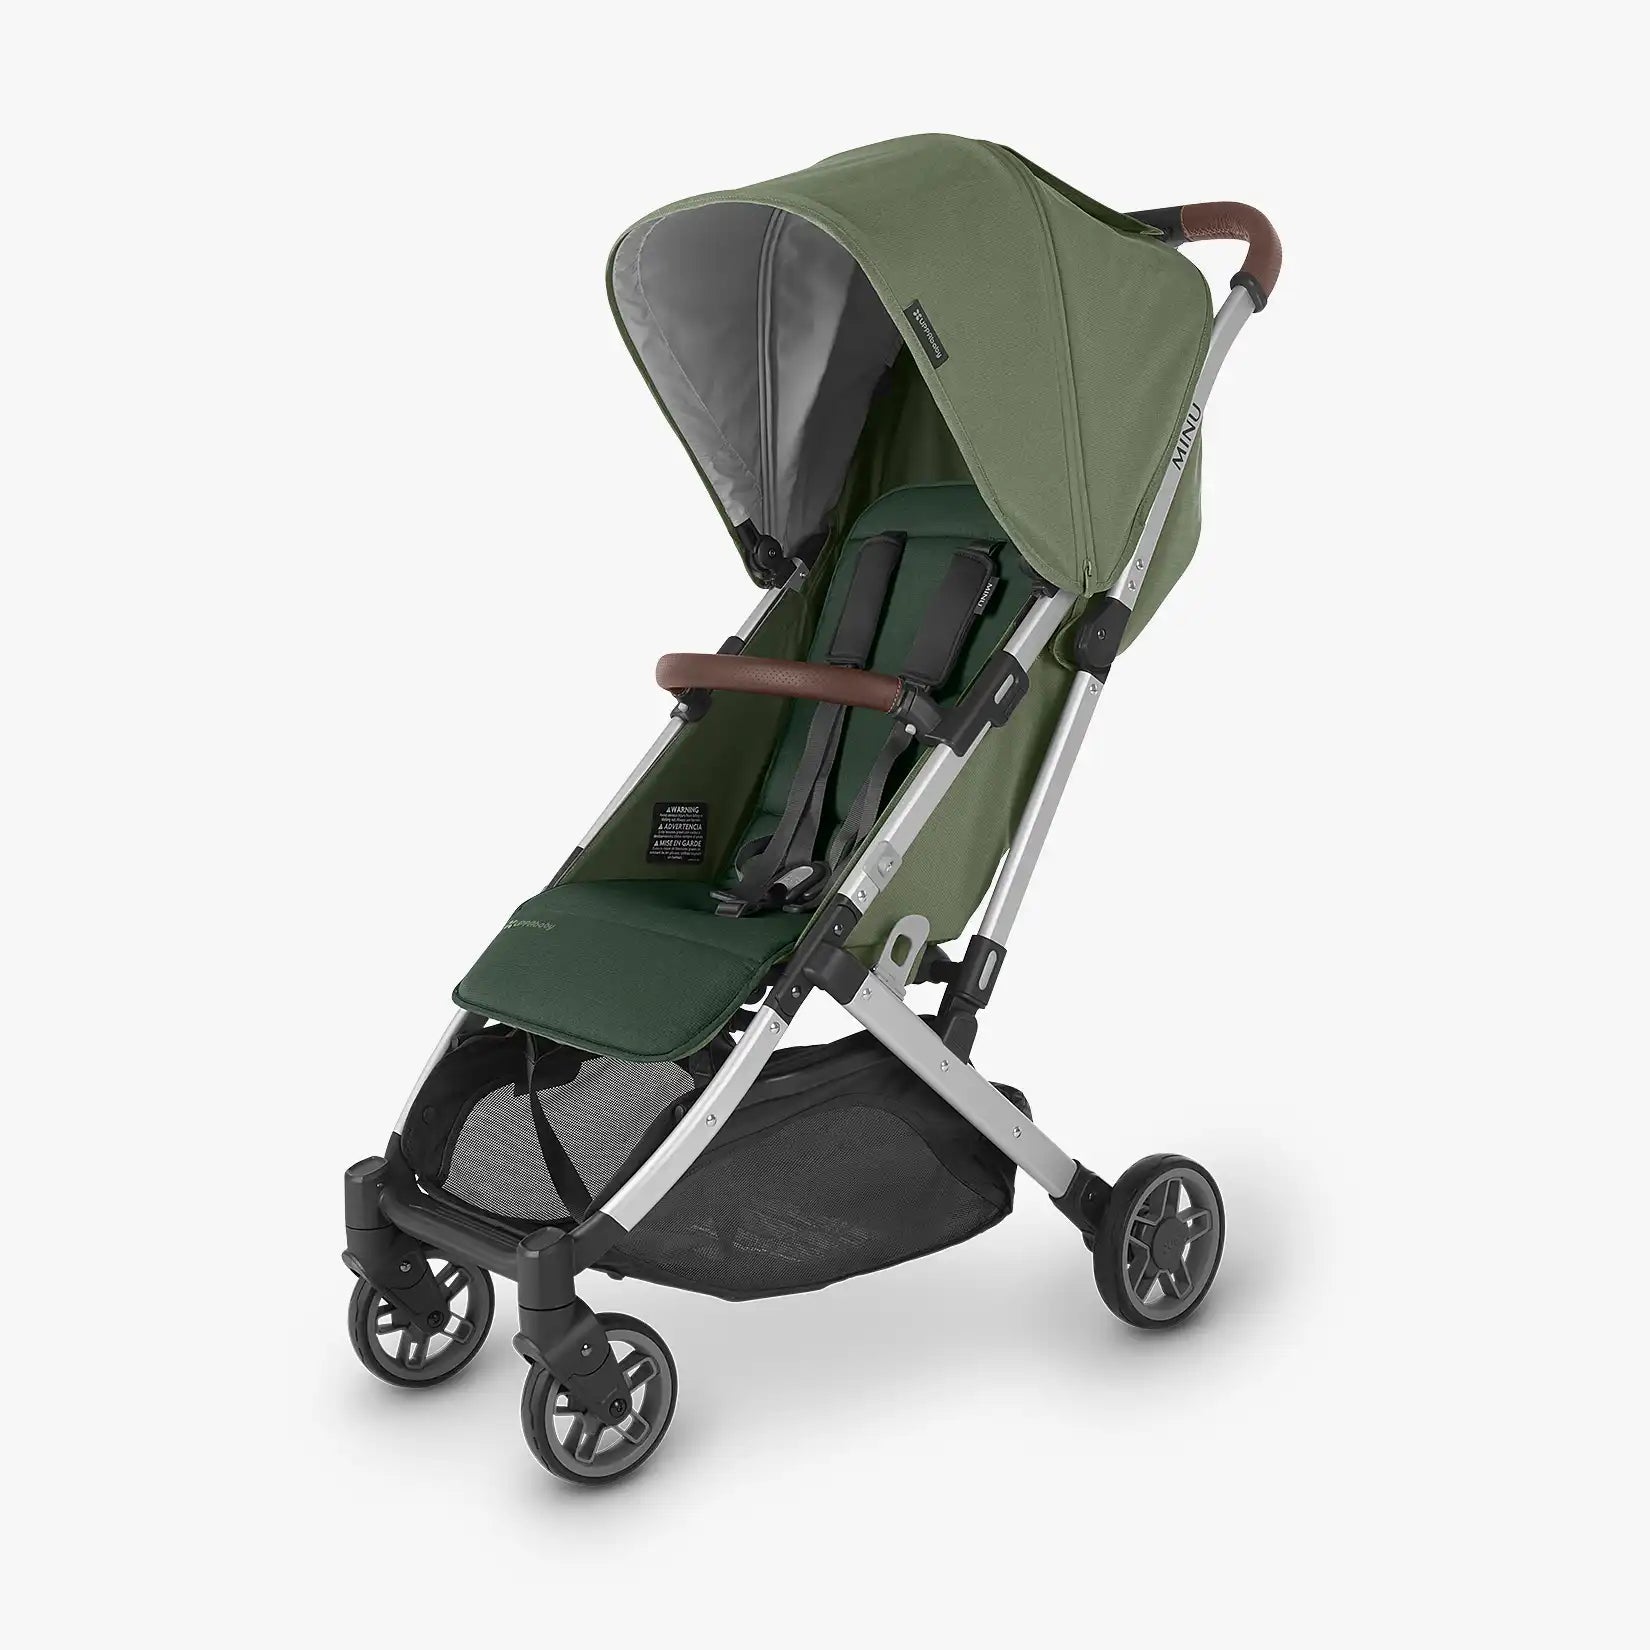 UPPAbaby MINU V2 Stroller - ANB Baby -810030095644$300 - $500